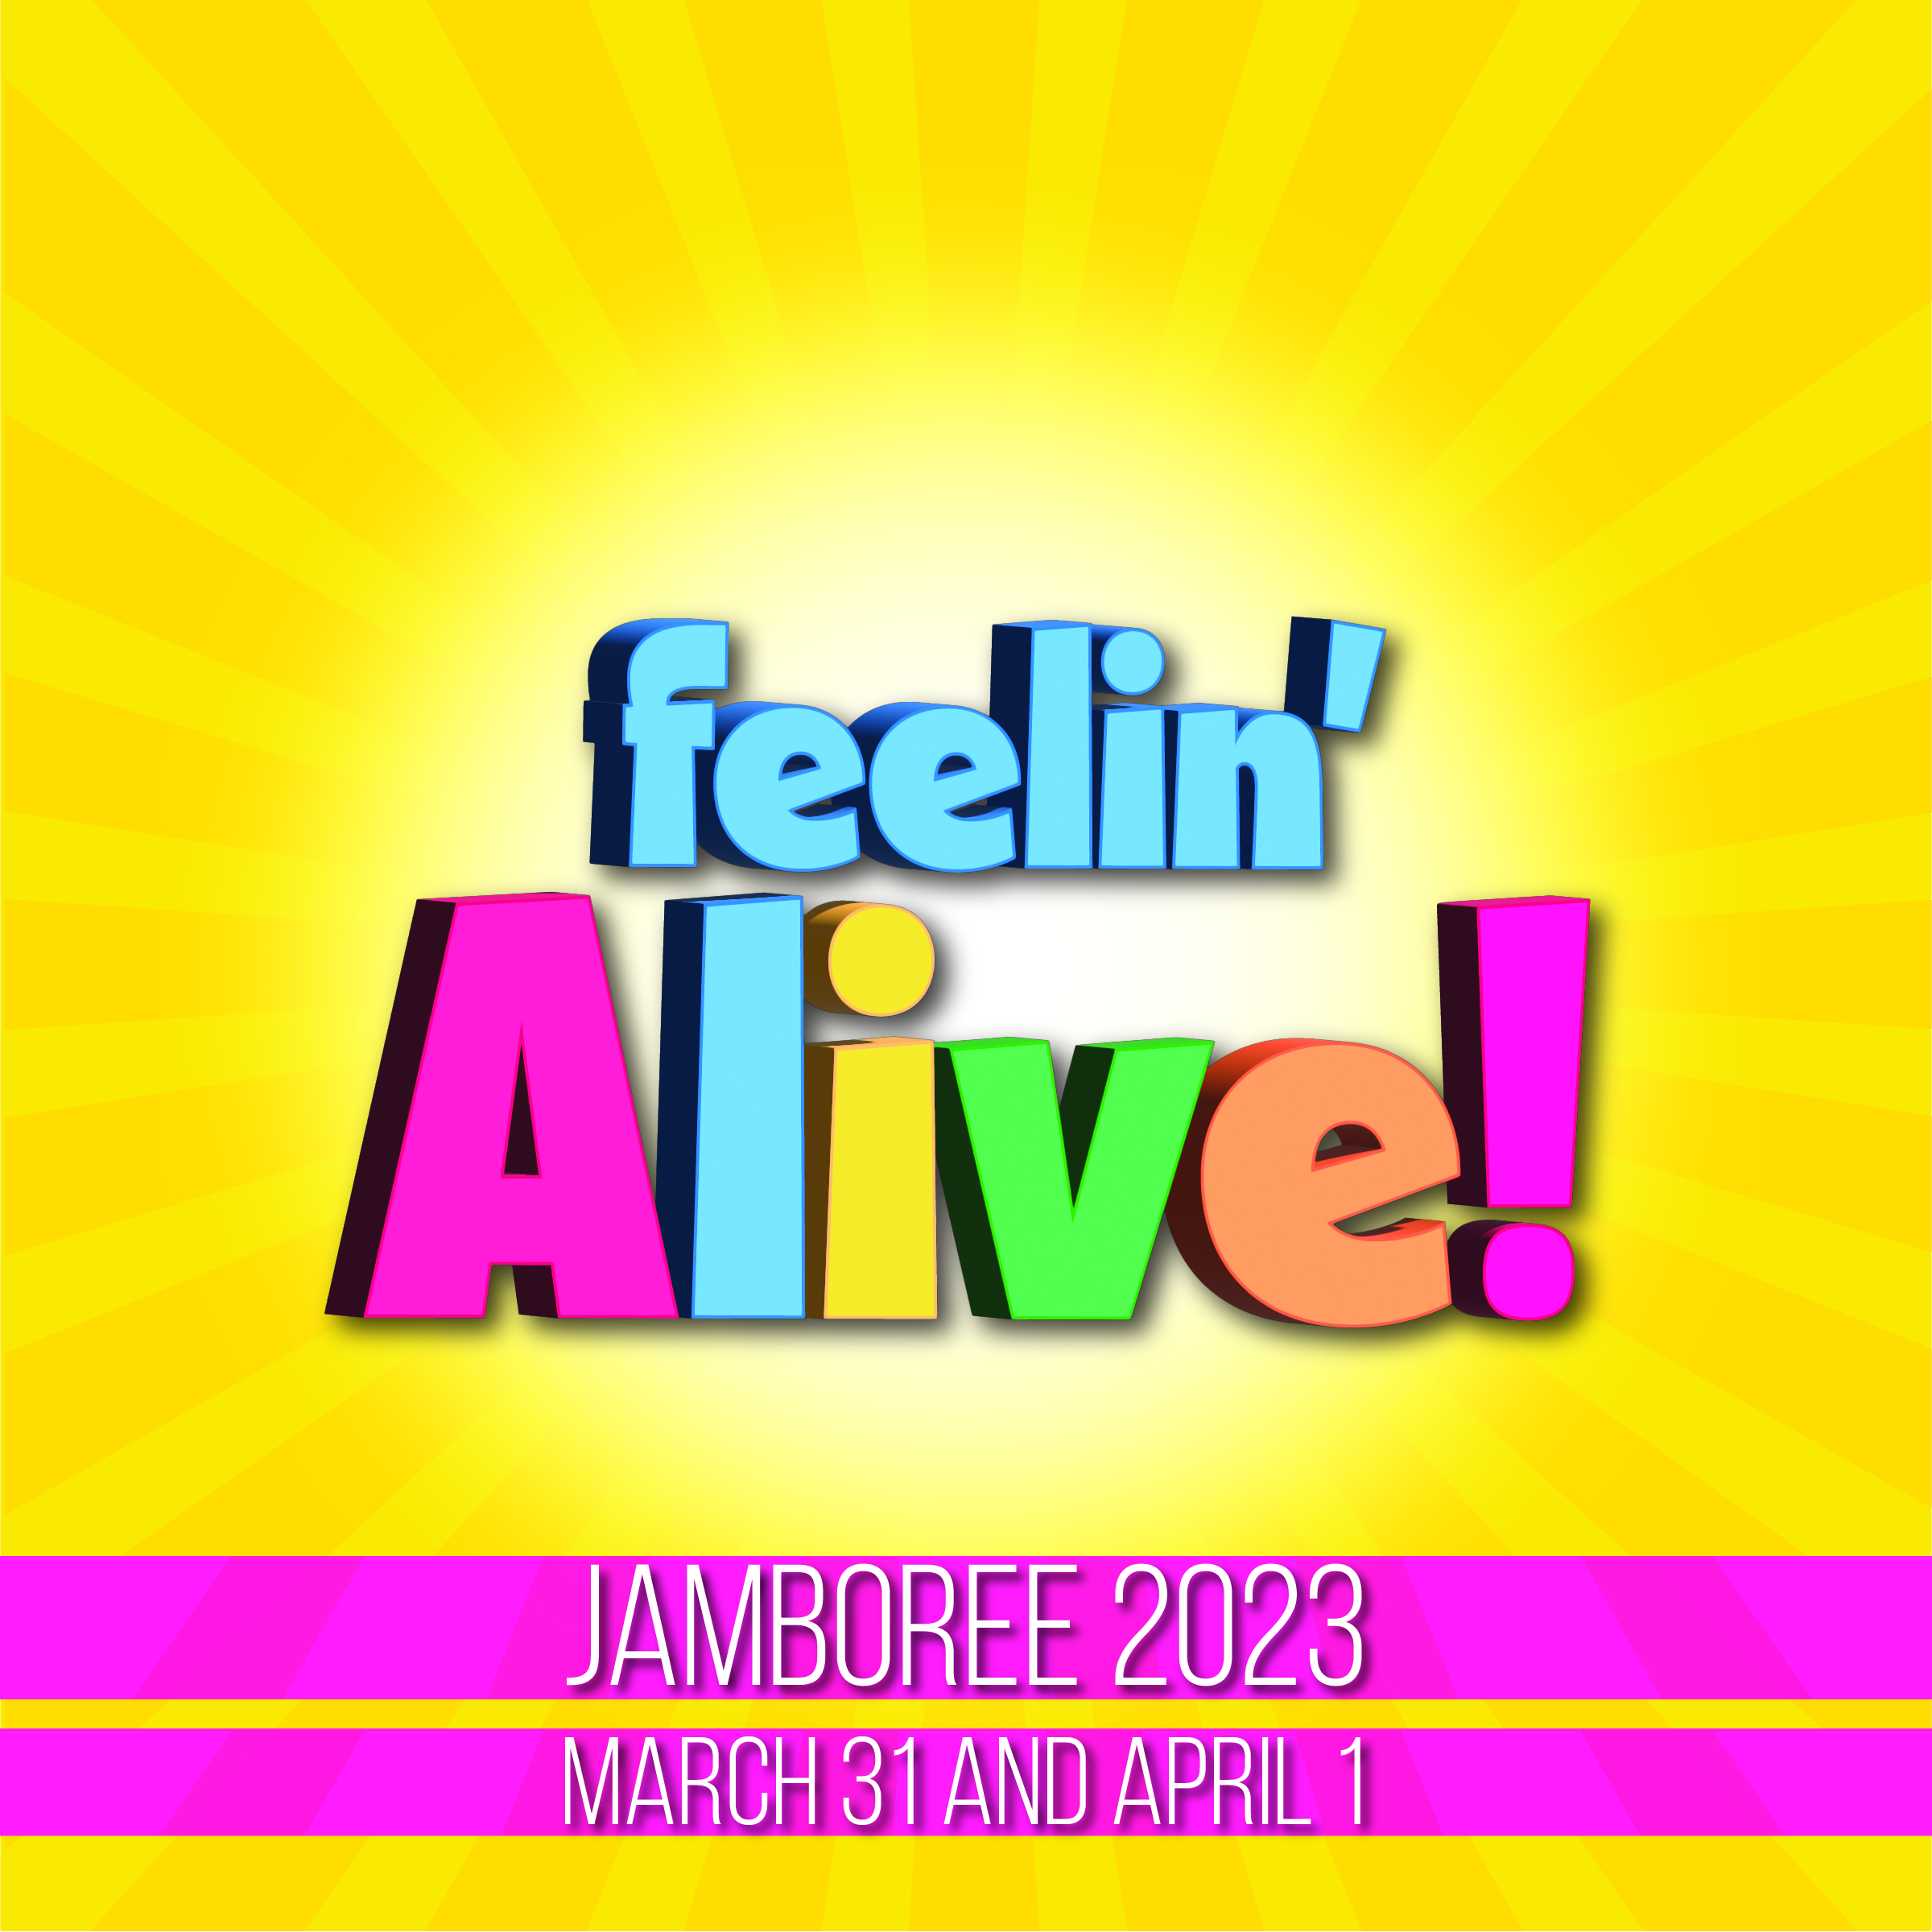 Jamboree 2023 Theme - Feeling Alive